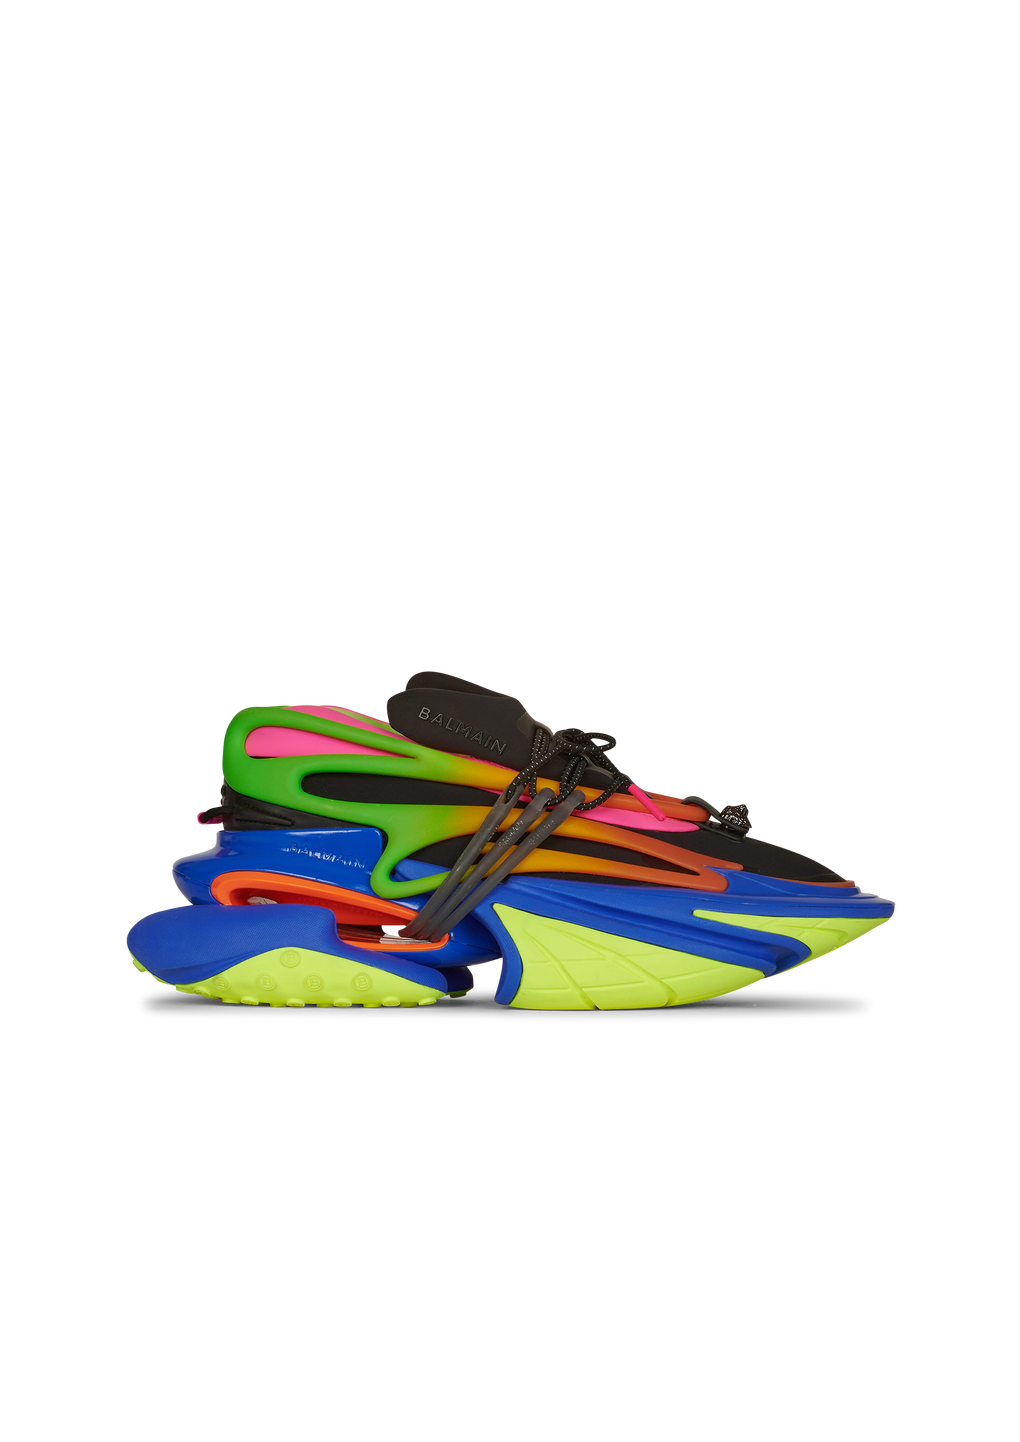 Unicorn Low-Top-Sneakers aus mehrfarbigem Neopren und Leder, multicolor, hi-res